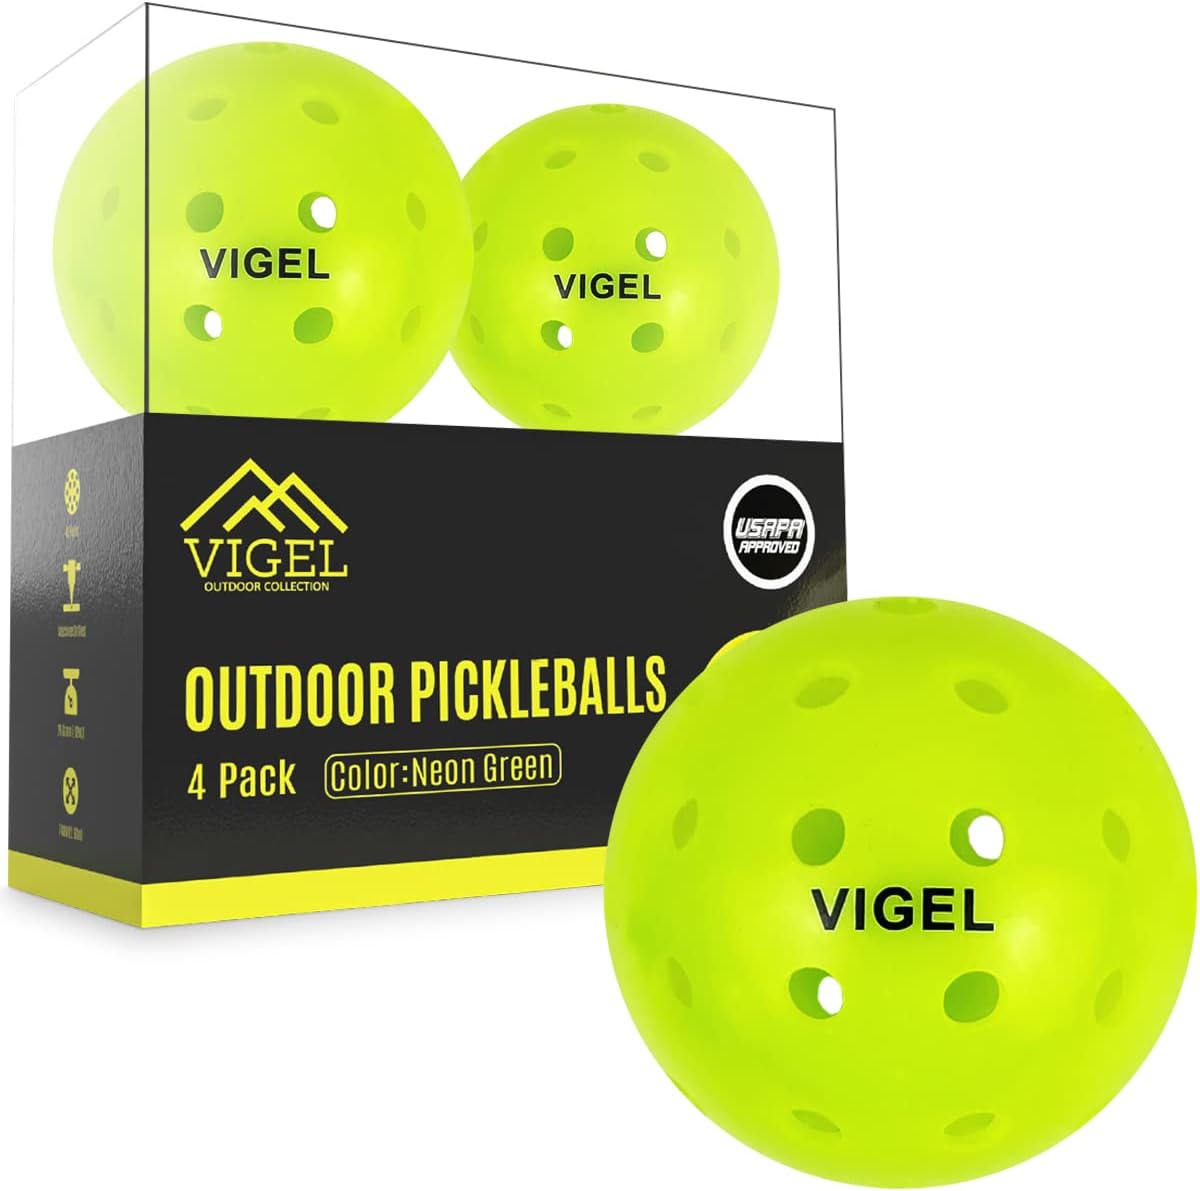 Vigel Premium Outdoor Pickleball Balls Set of 4